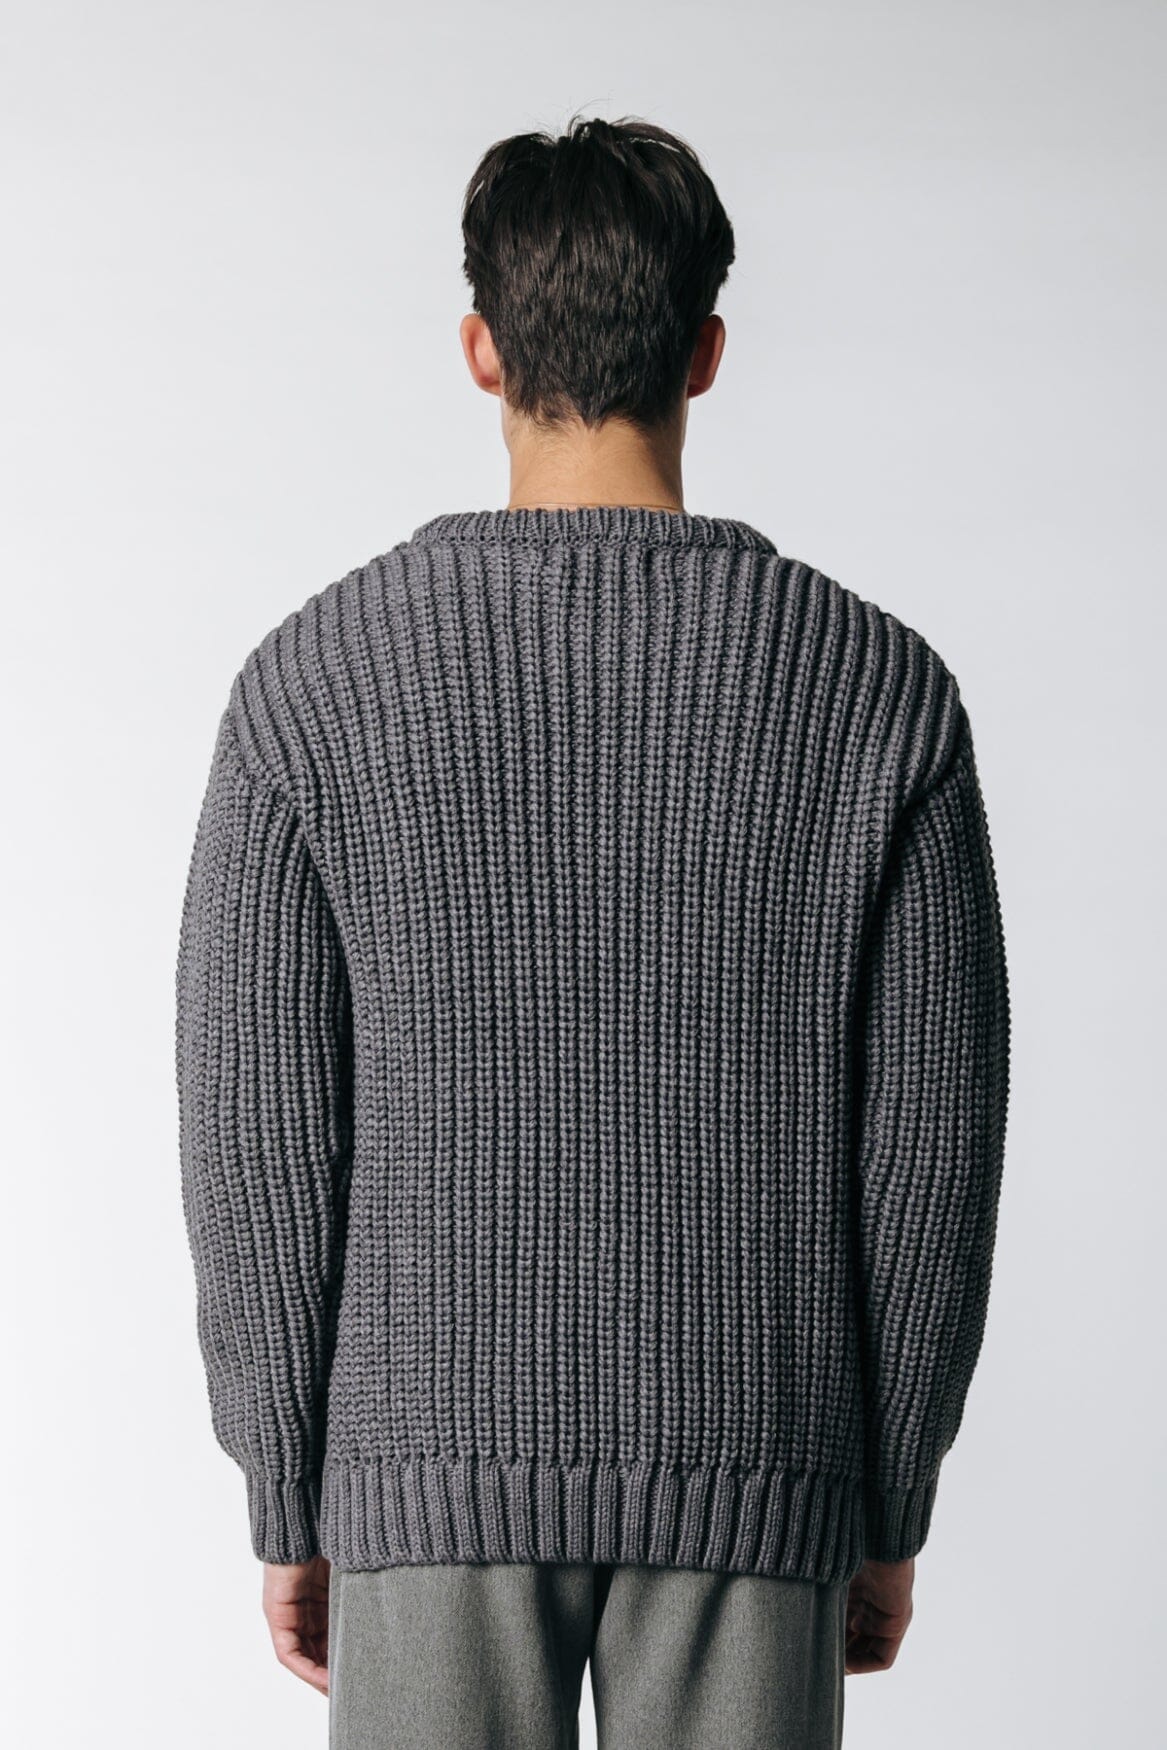 Colourful Rebel Dean Garment Dye Rib Knit Sweater | Dark grey